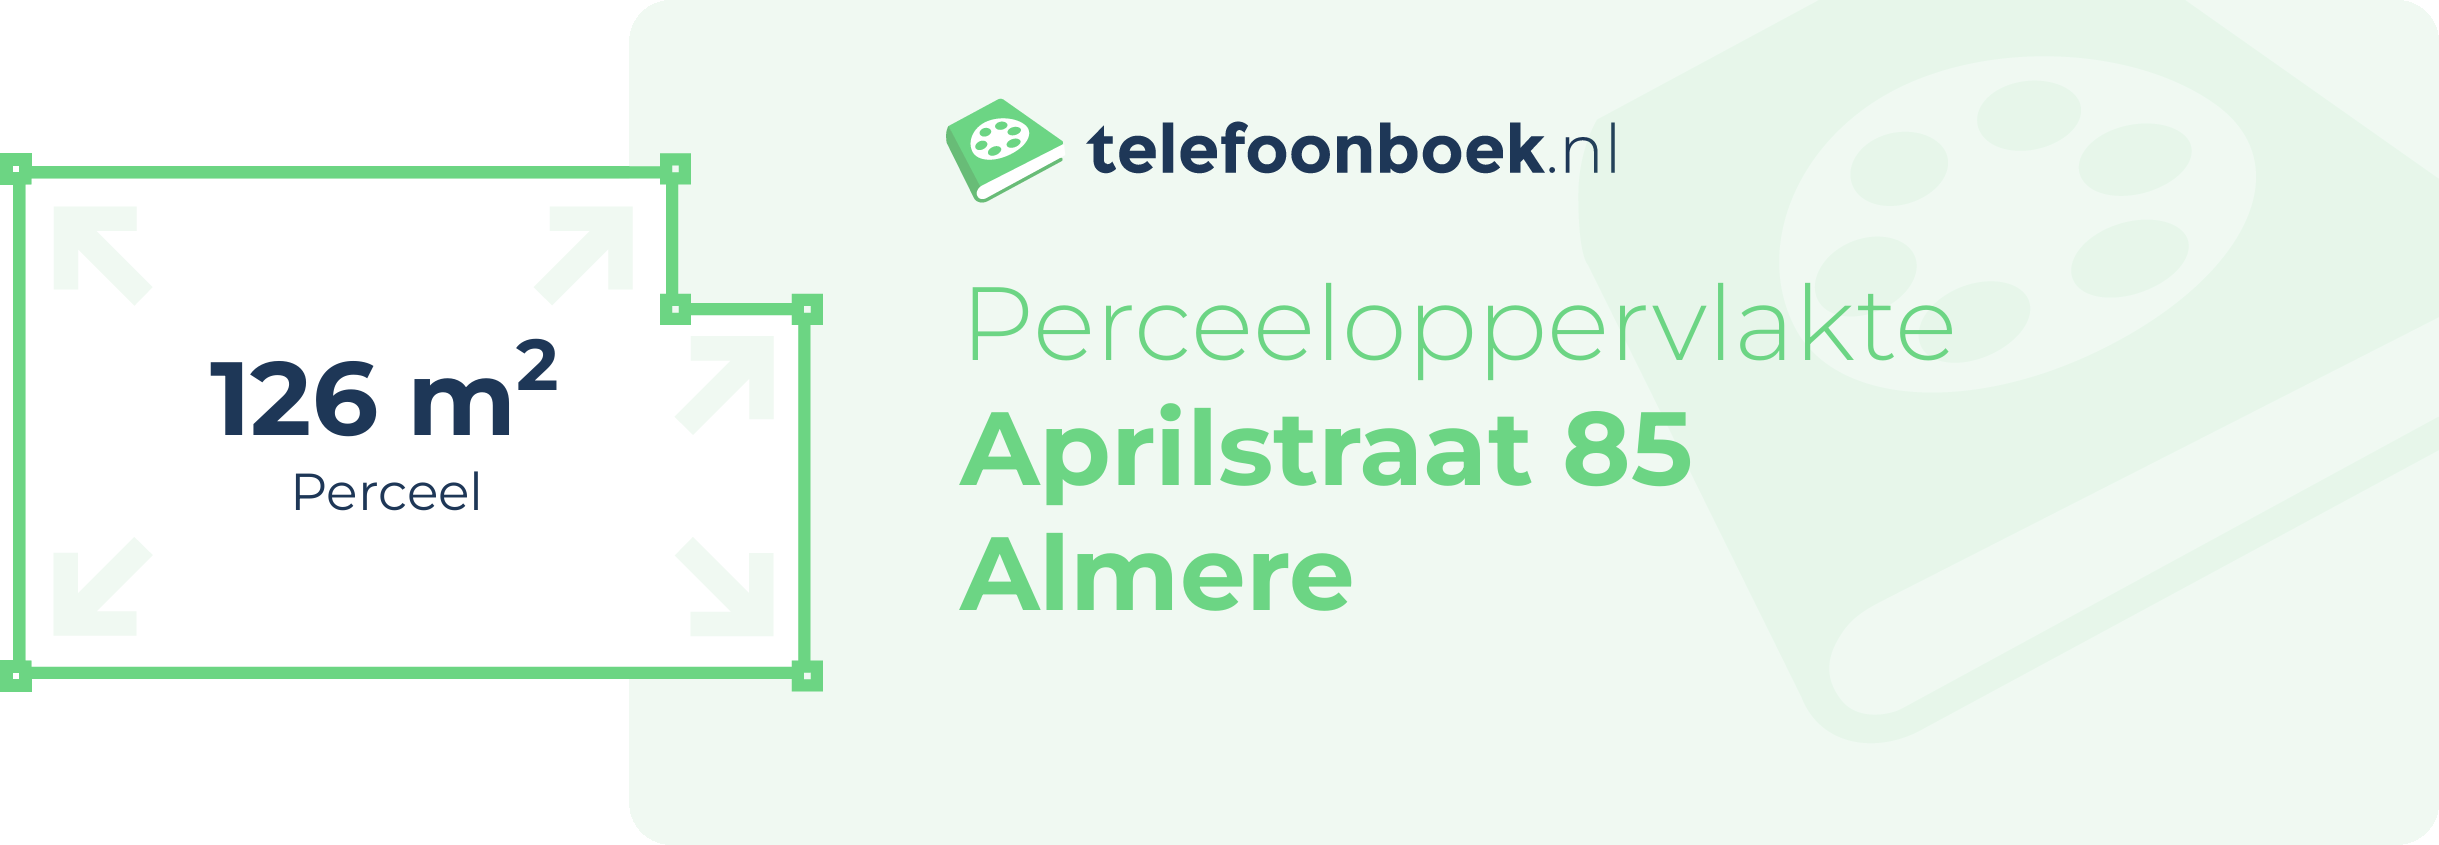 Perceeloppervlakte Aprilstraat 85 Almere